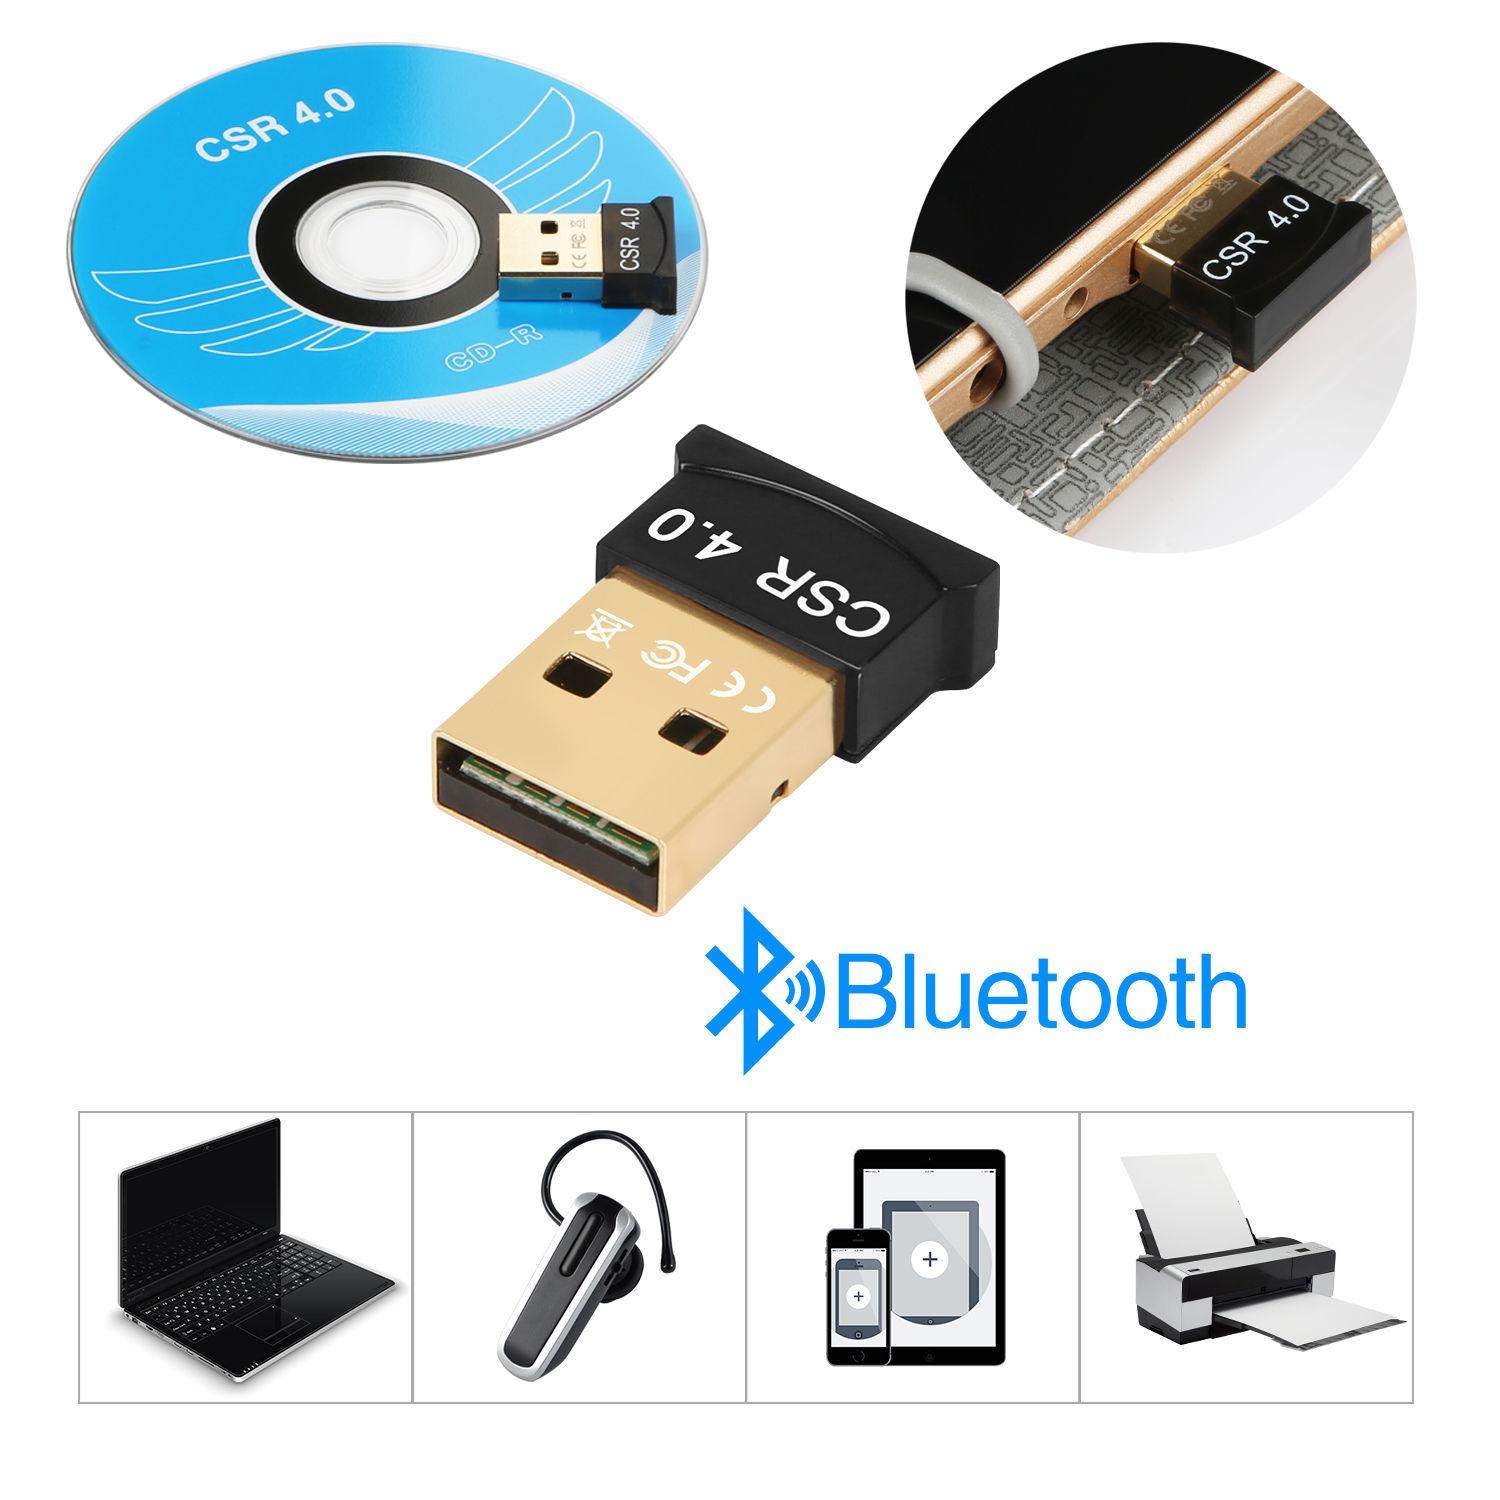 Mini USB Bluetooth 4.0 Adapter Wireless Dongle EDR for PC Win7 8 10 XP Vista